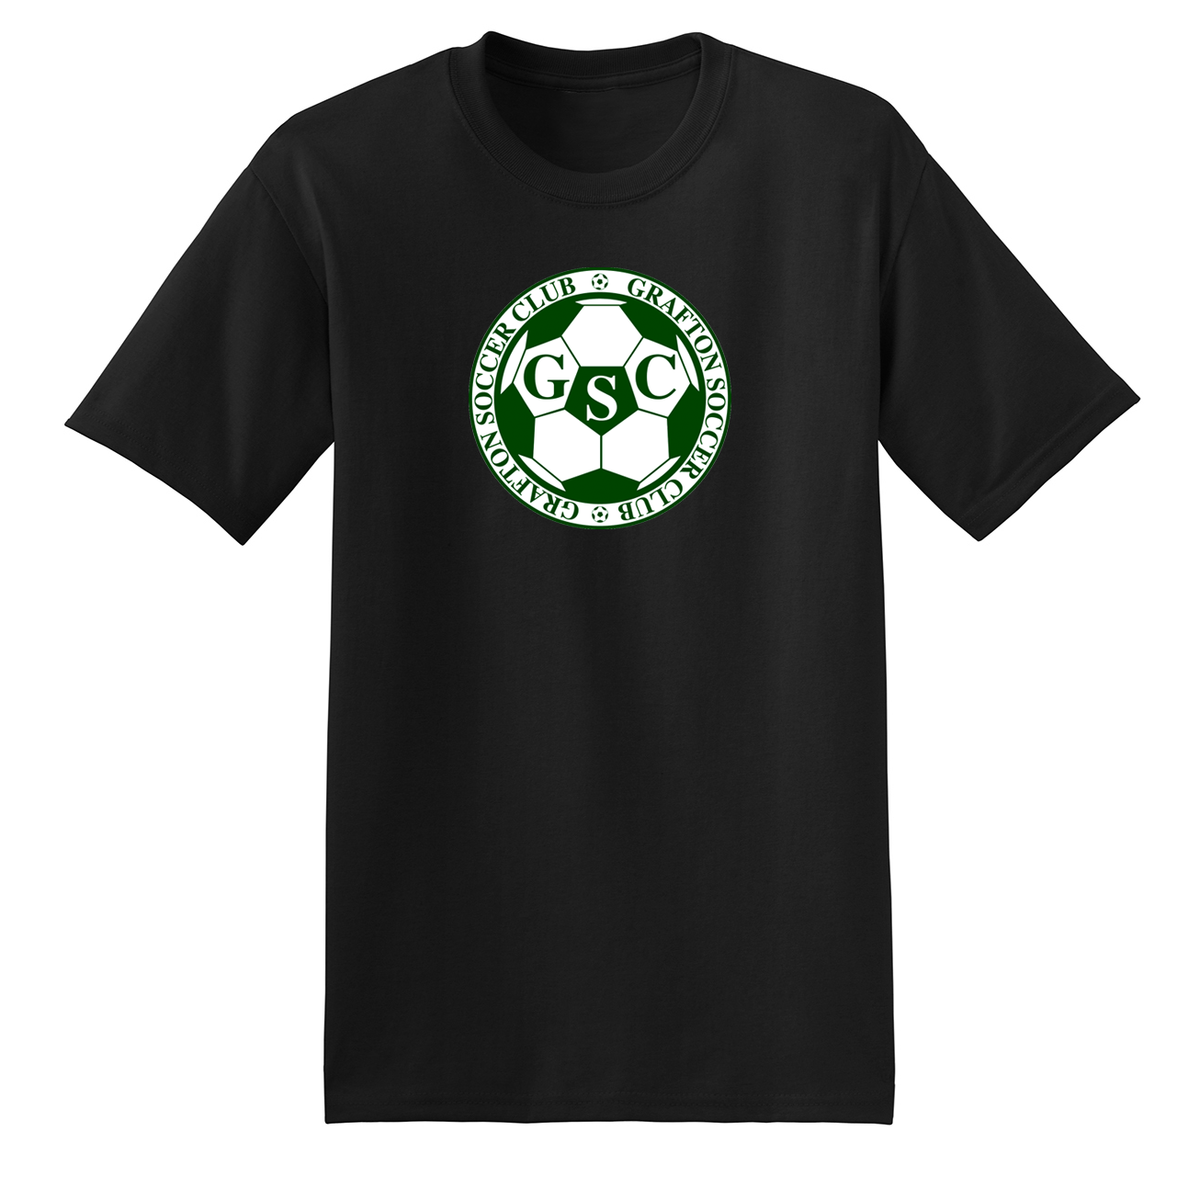 Grafton Youth Soccer Club T-Shirt